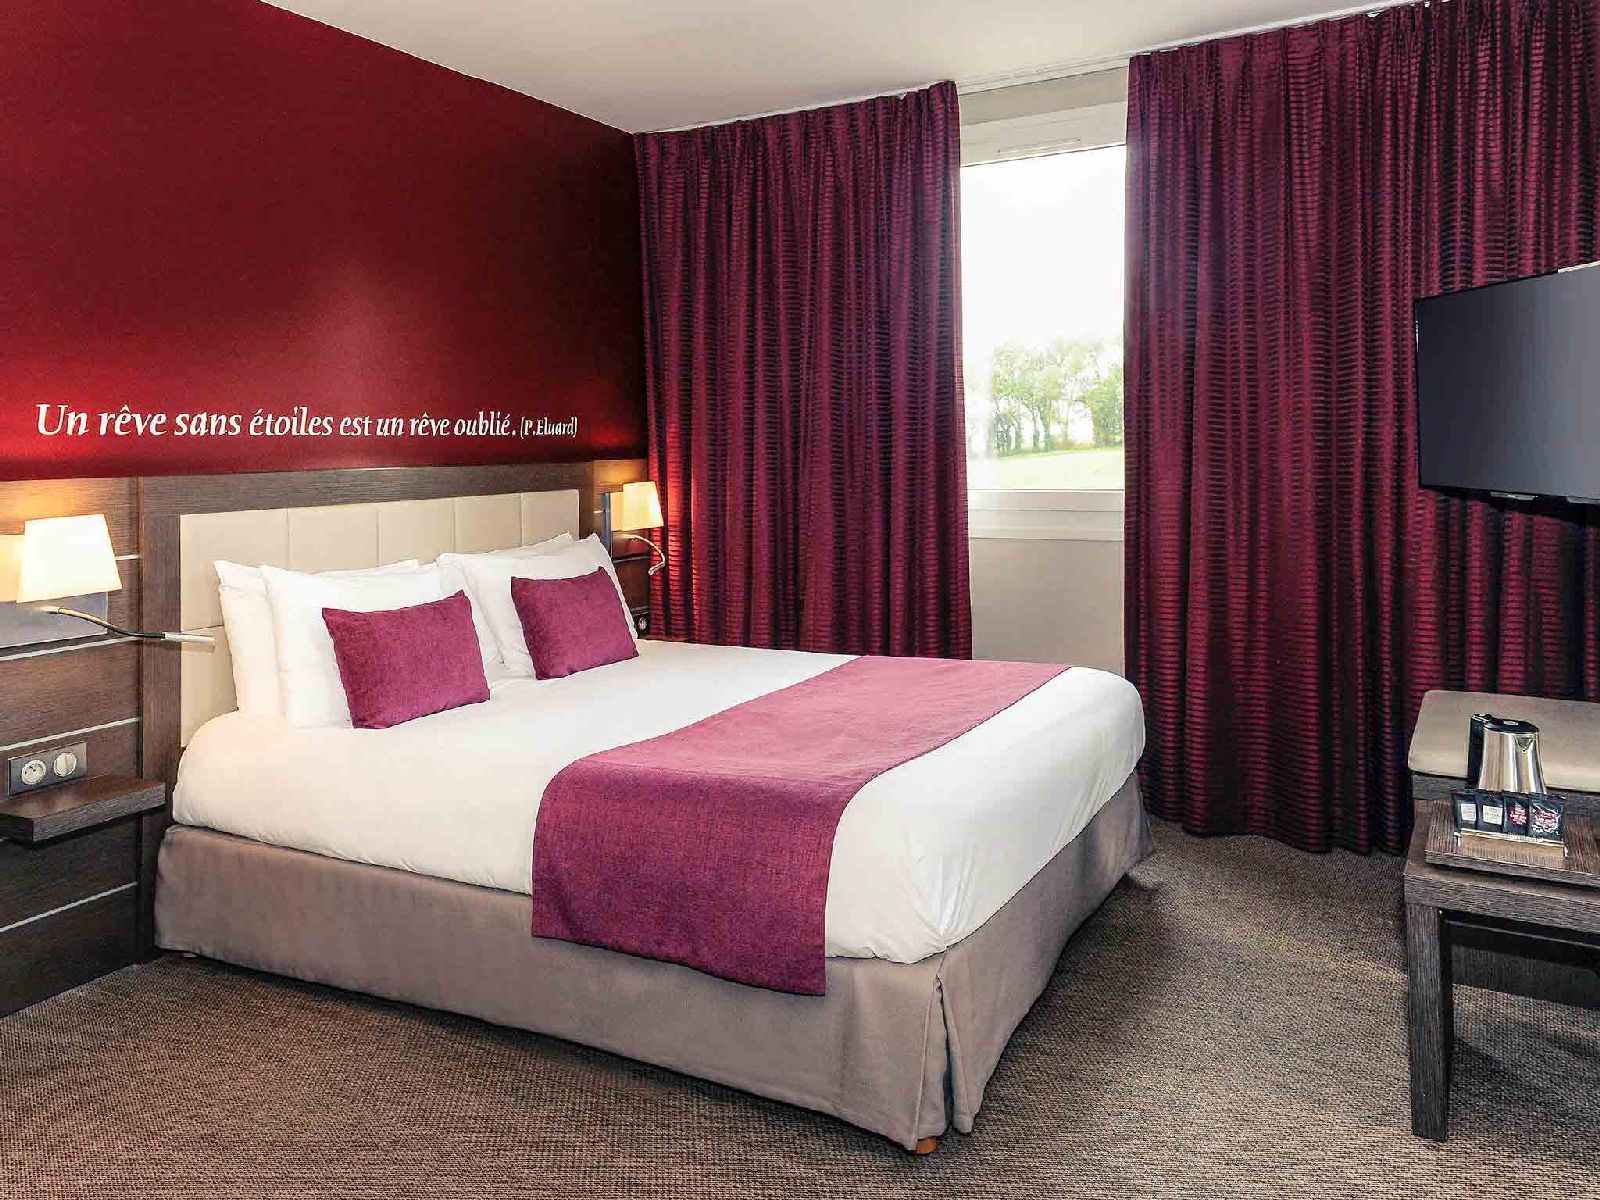 golf-expedition-golf-reizen-frankrijk-regio-normandië-hotel-mercure-omaha-beach-slaapkamer-rood-wit-interieur.jpg